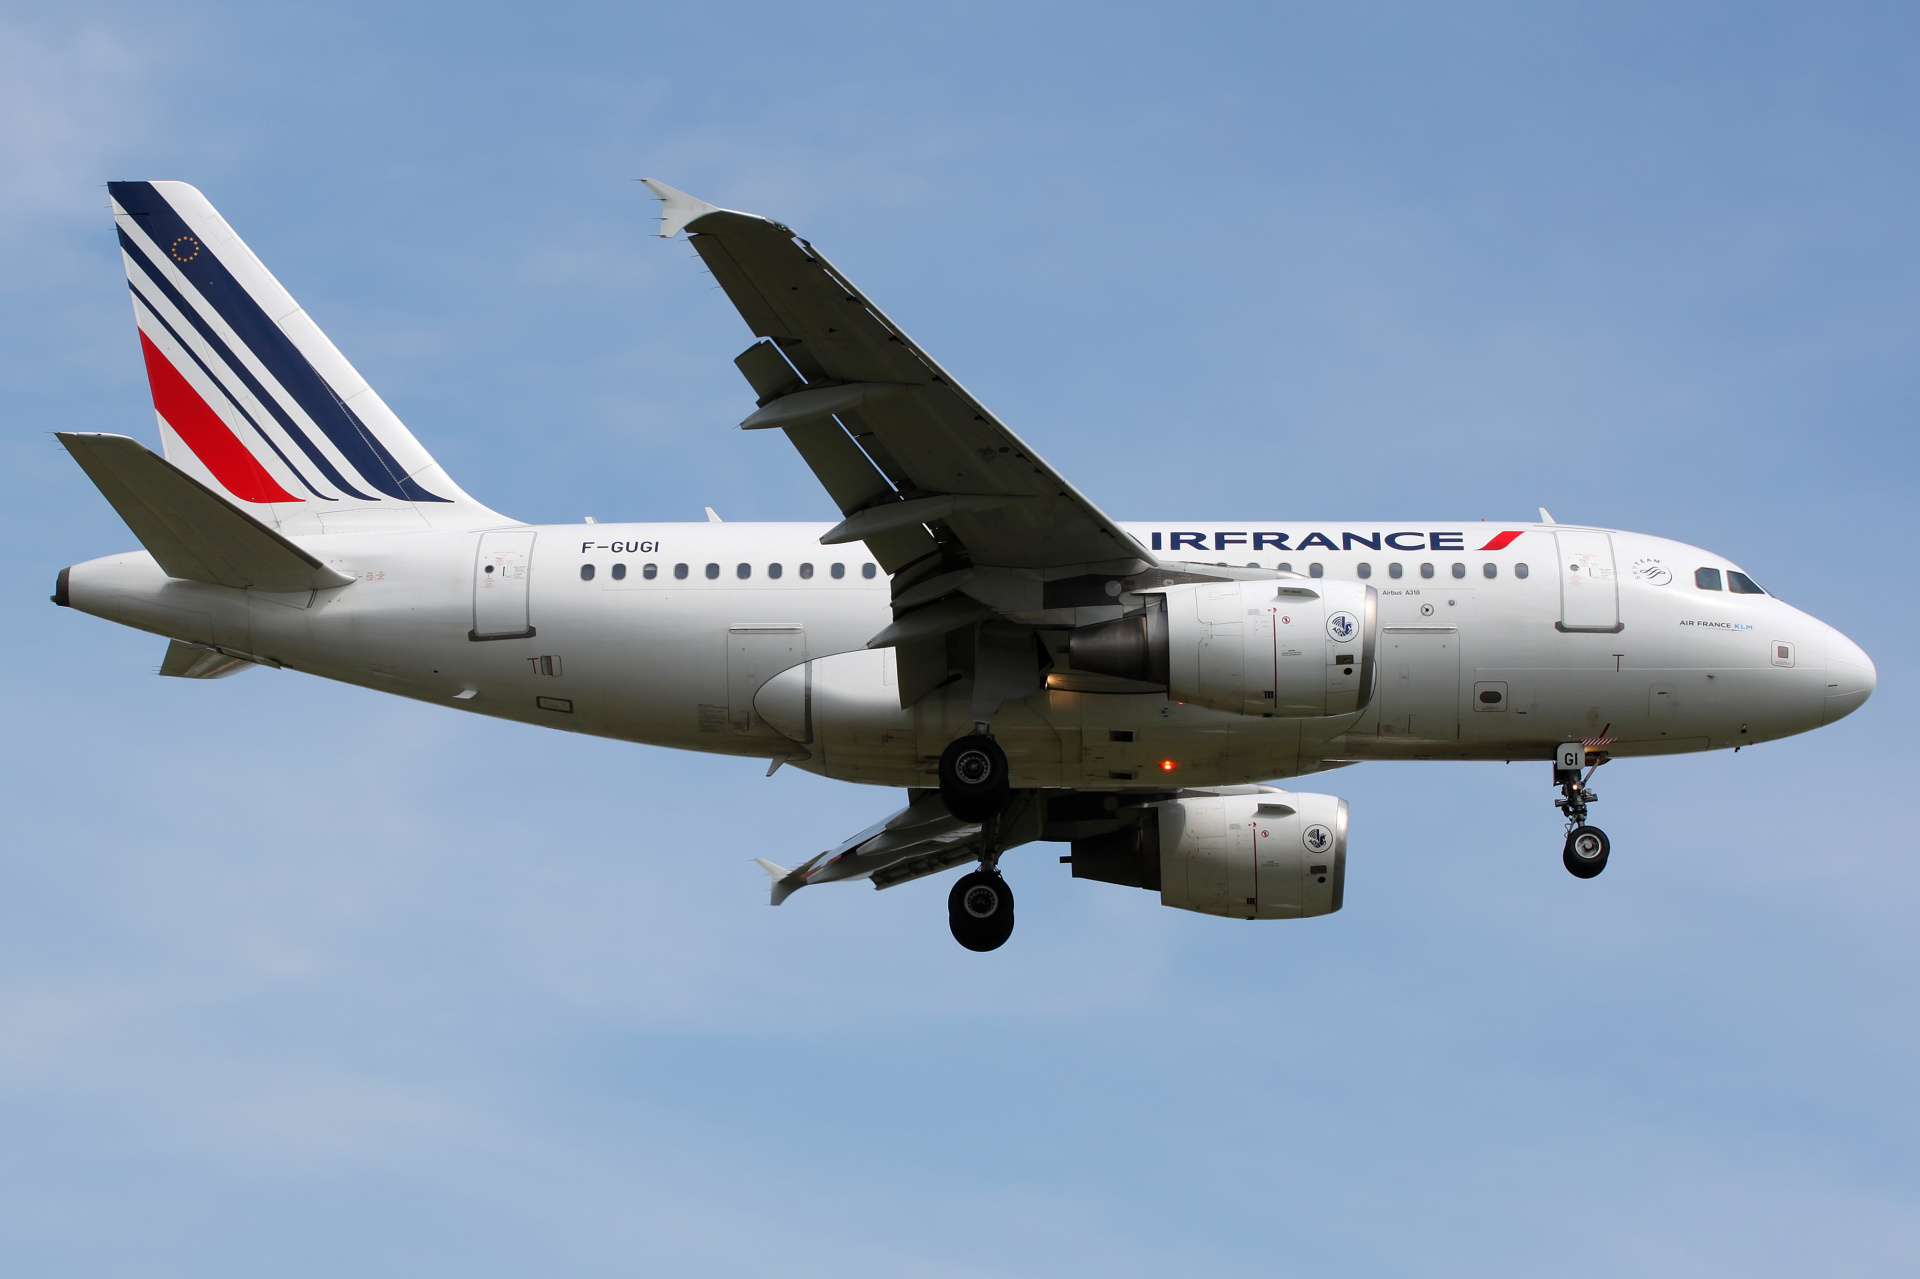 F-GUGI (Aircraft » EPWA Spotting » Airbus A318-100 » Air France)